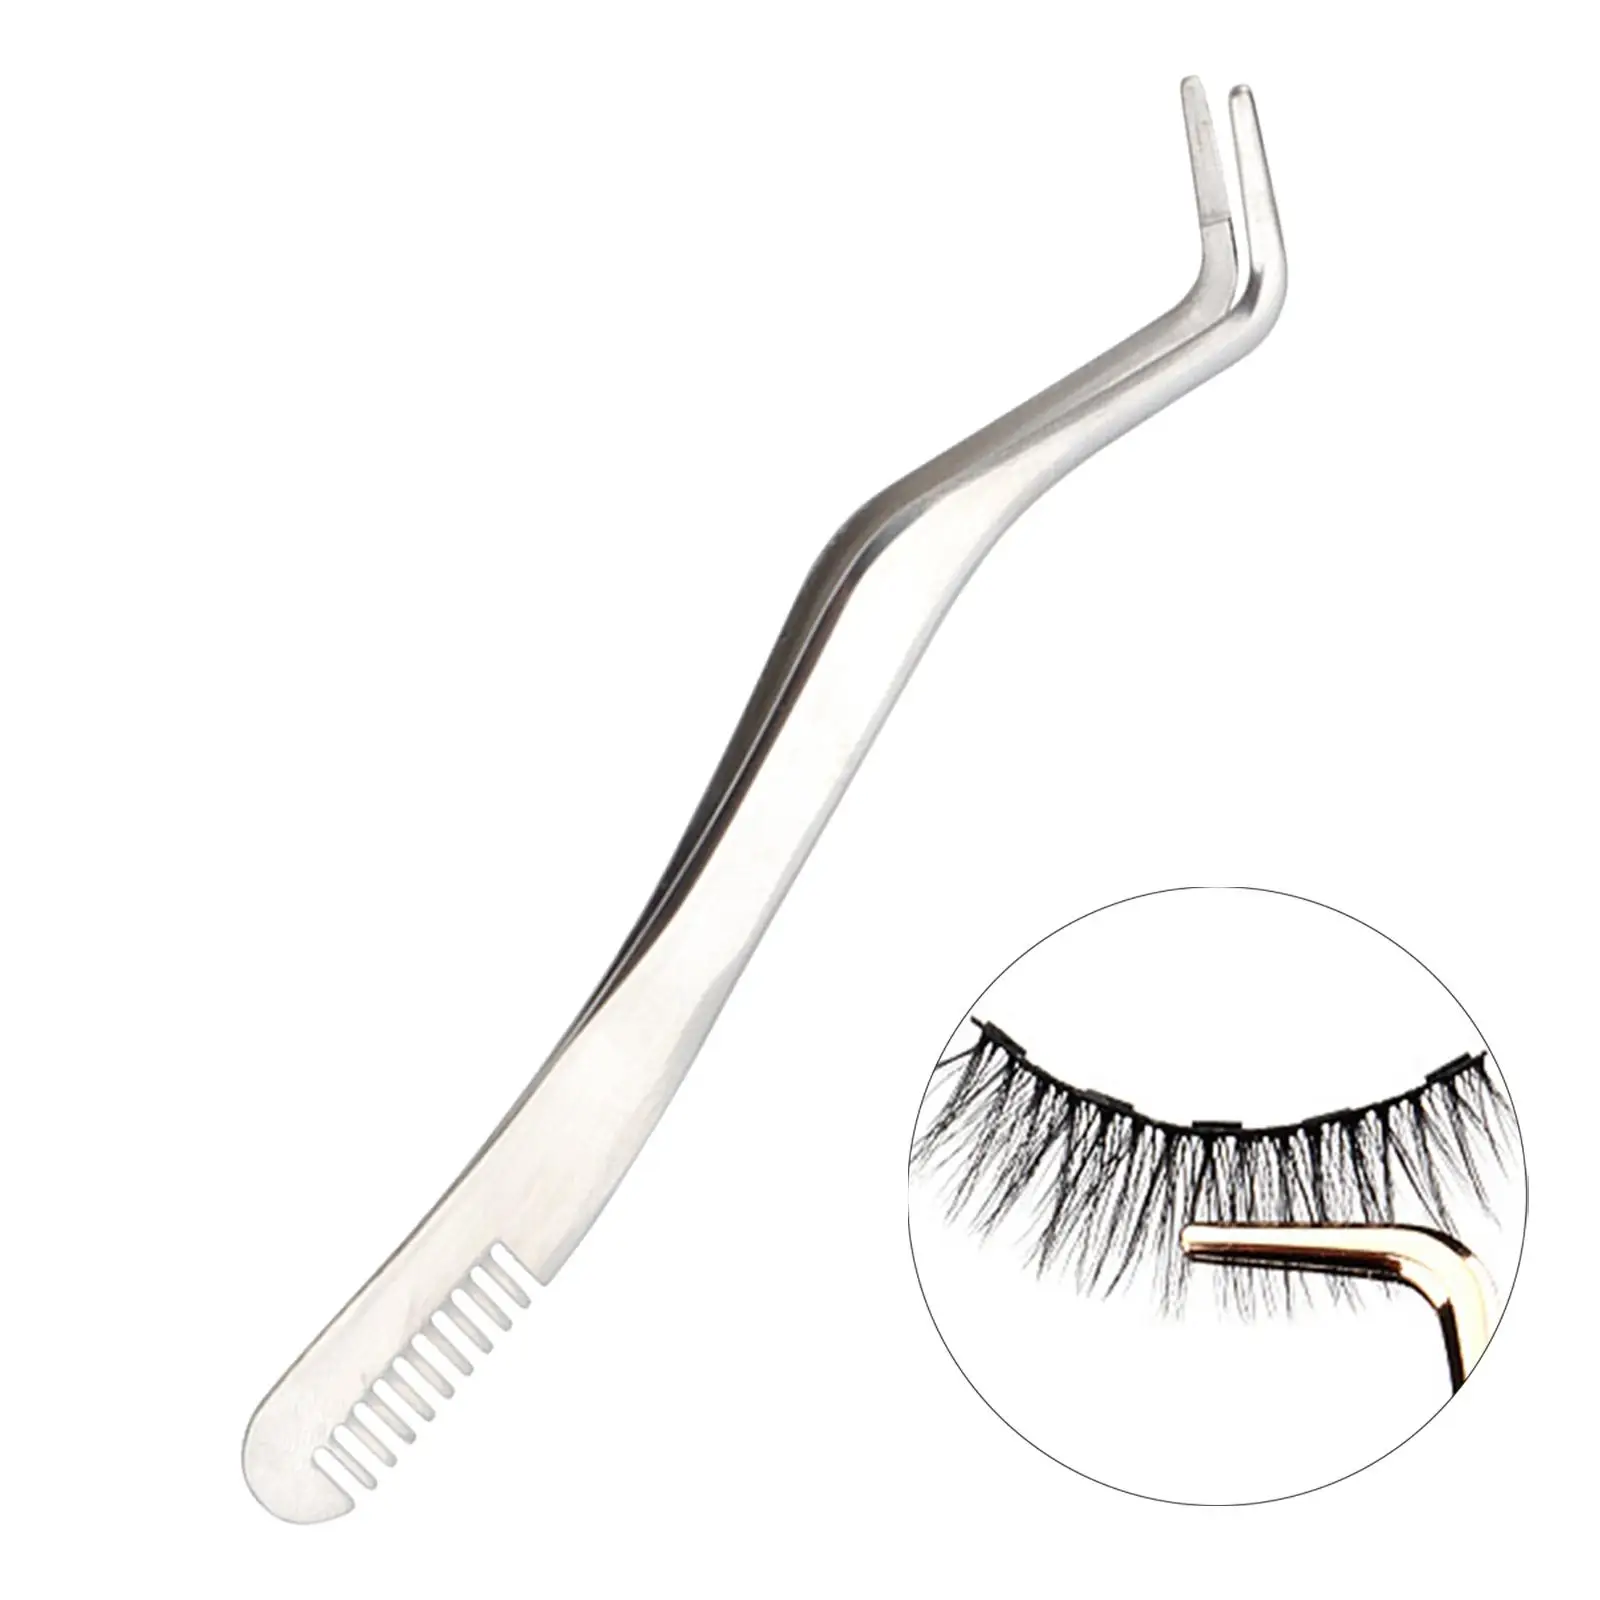 Ergonomic Curved Lash Tweezers, Lash Applicator Tool for Salon Use Makeup Artist